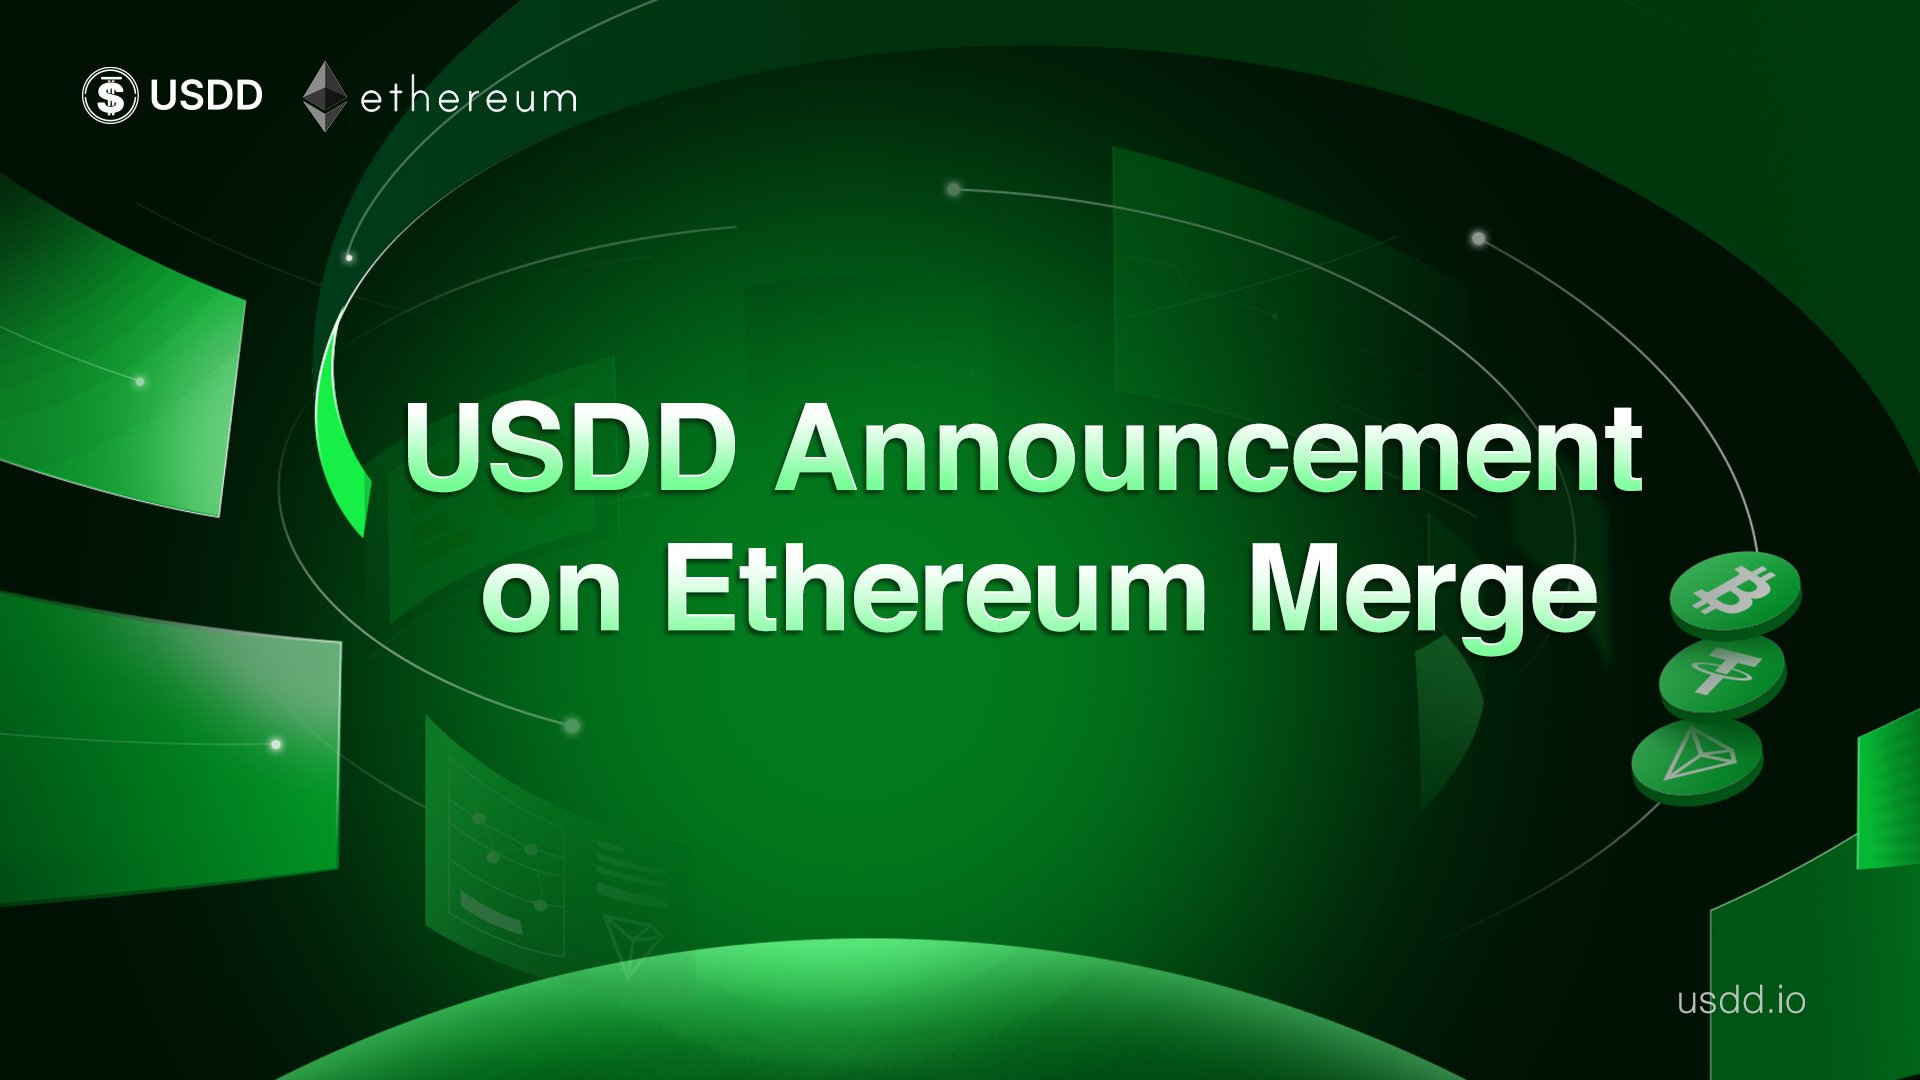 USDD Announcement on Ethereum Merge